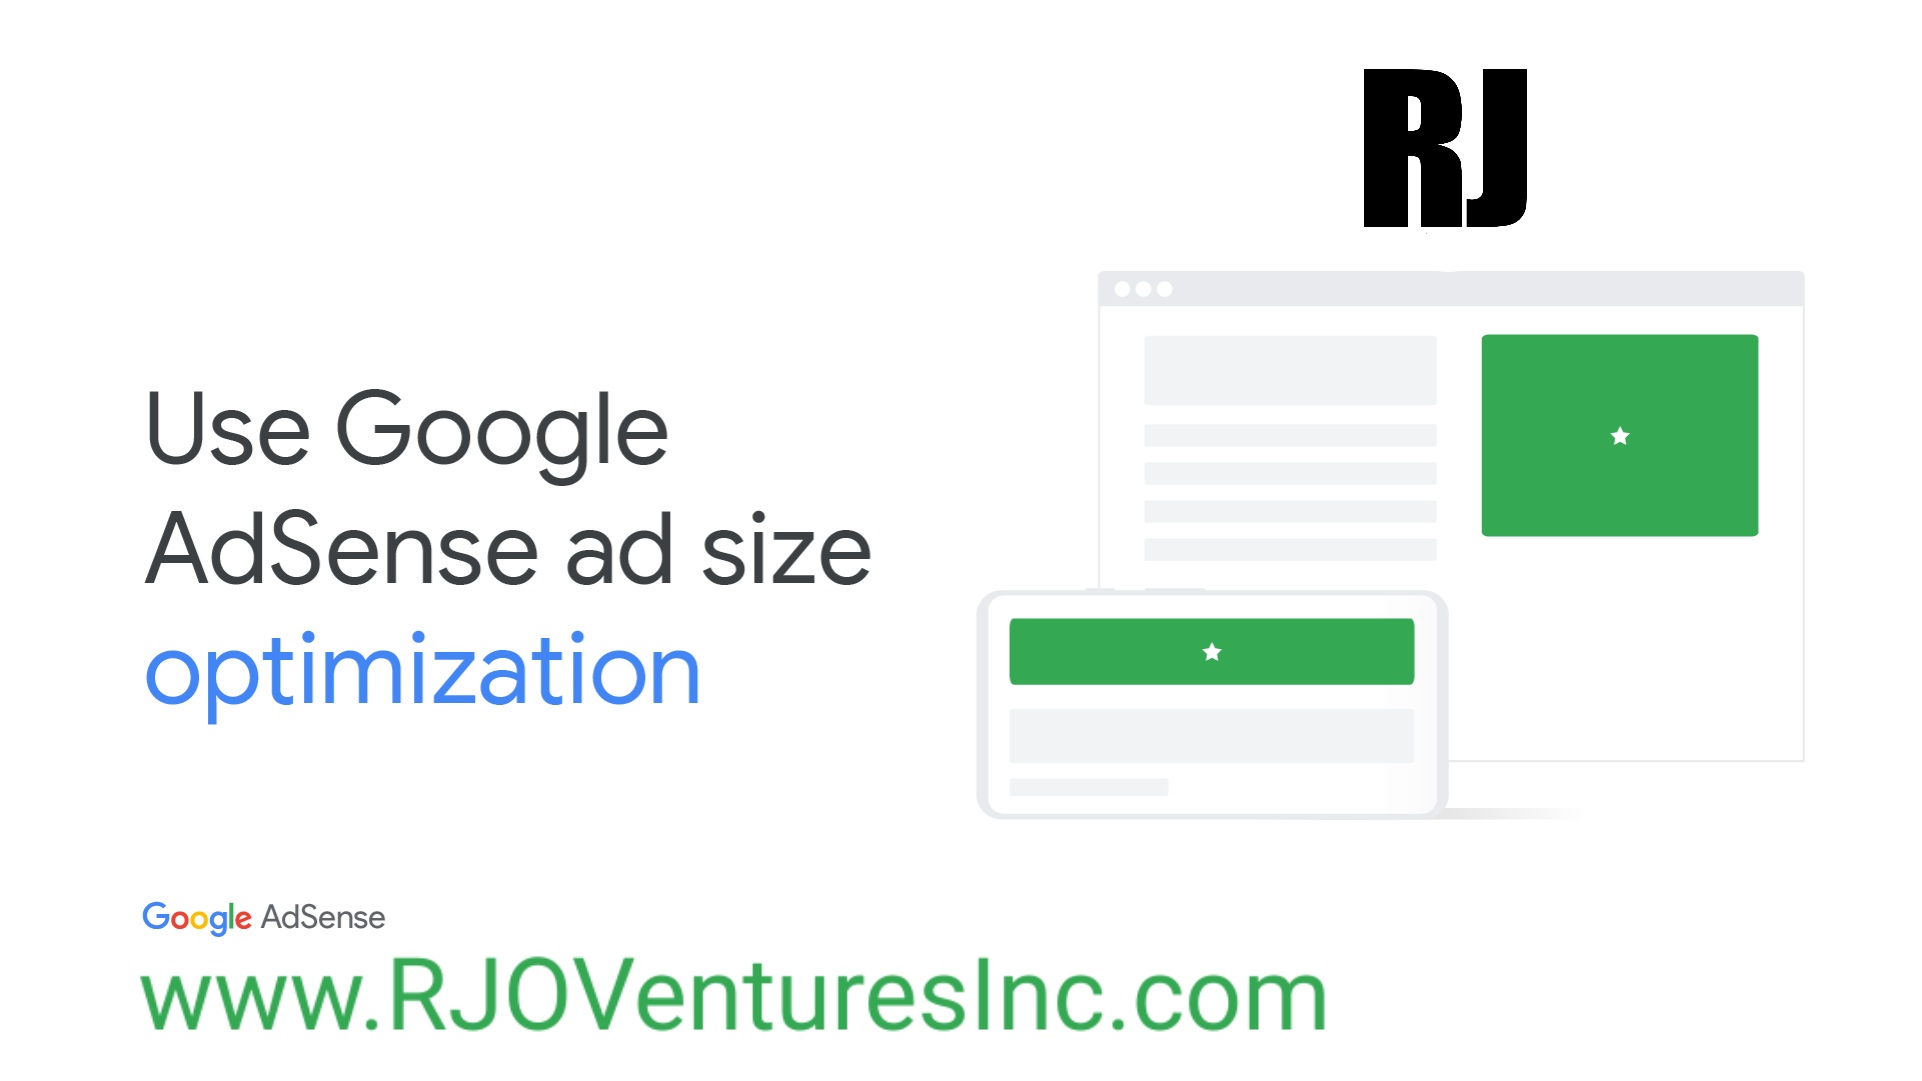 Google Cloud Partner: Maximize your earnings with ad size optimization [RJOVenturesInc.com]